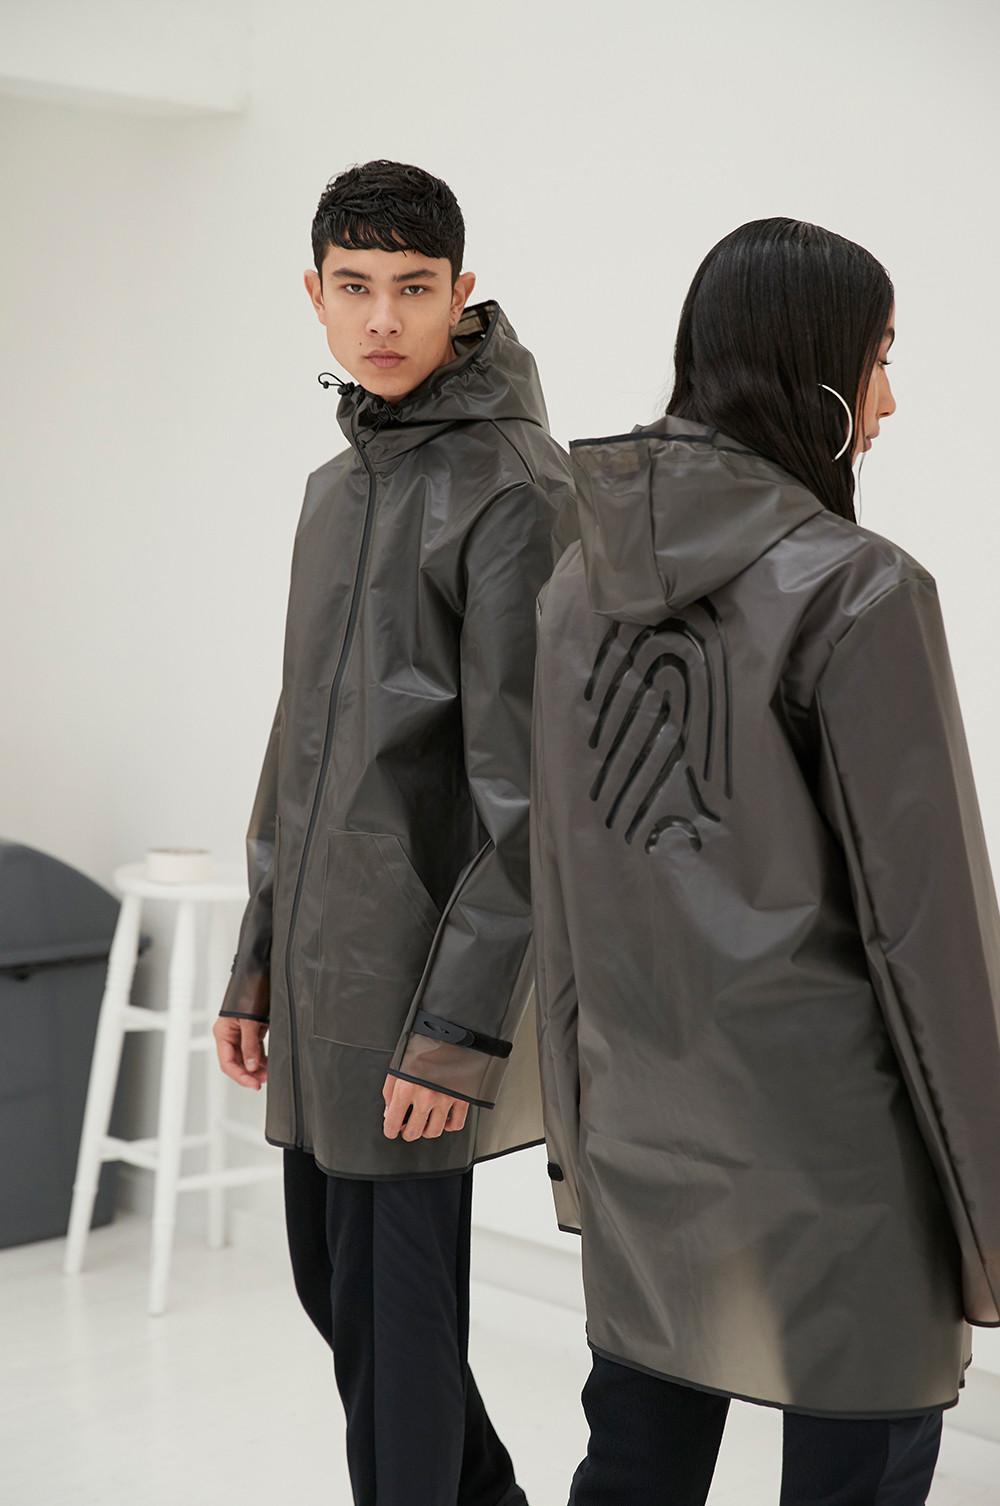 Models wearing a Primark raincoat